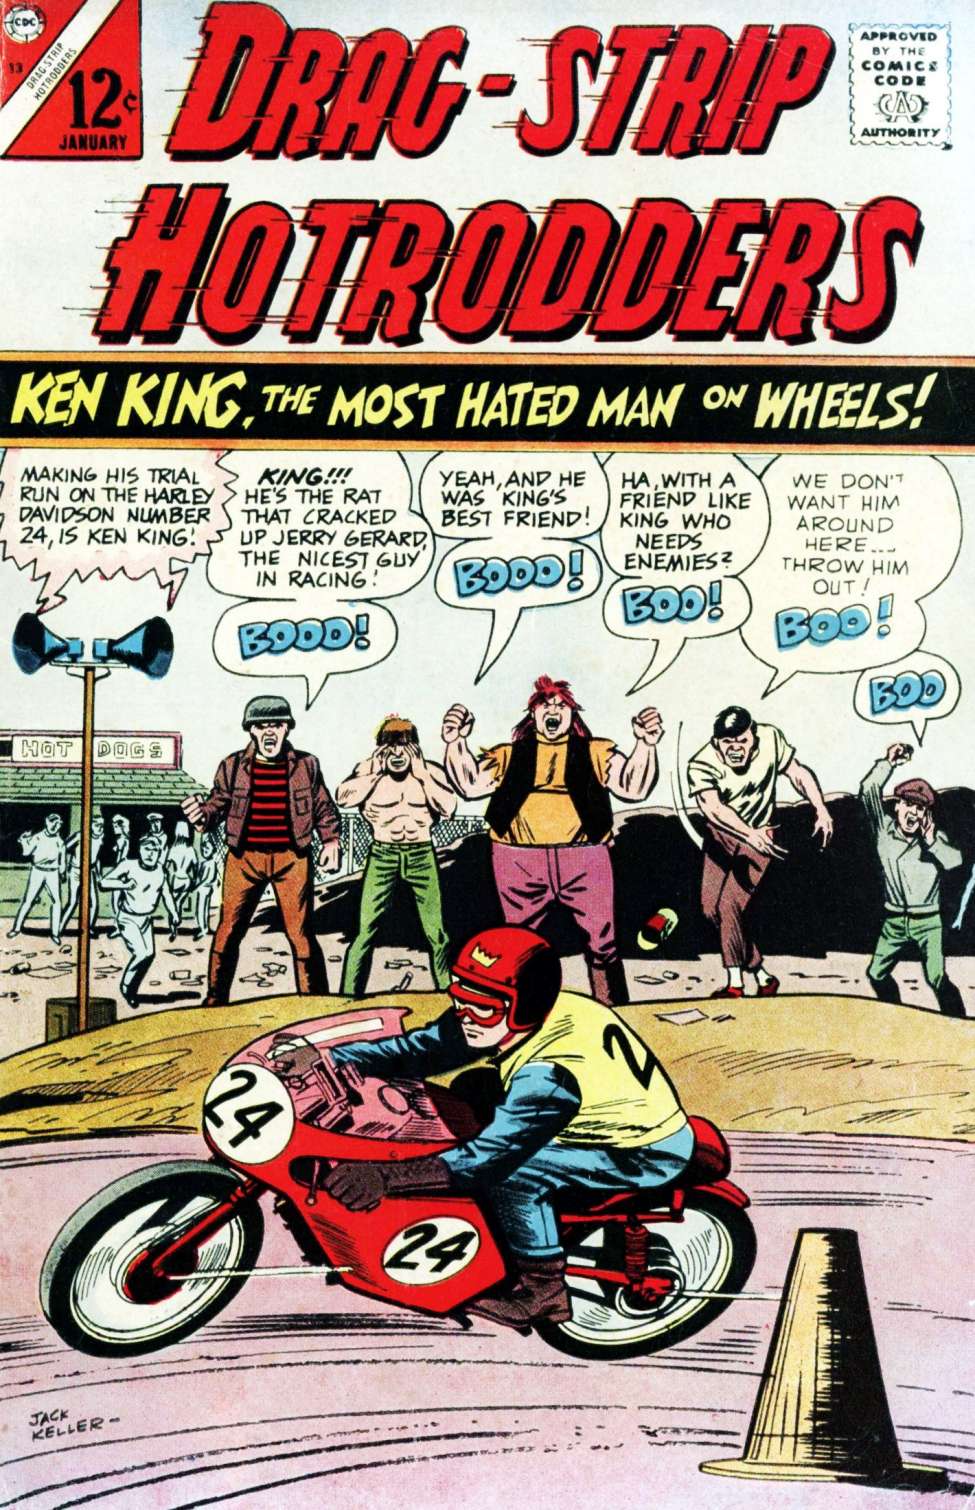 Comic Book Cover For Drag-Strip Hotrodders 13